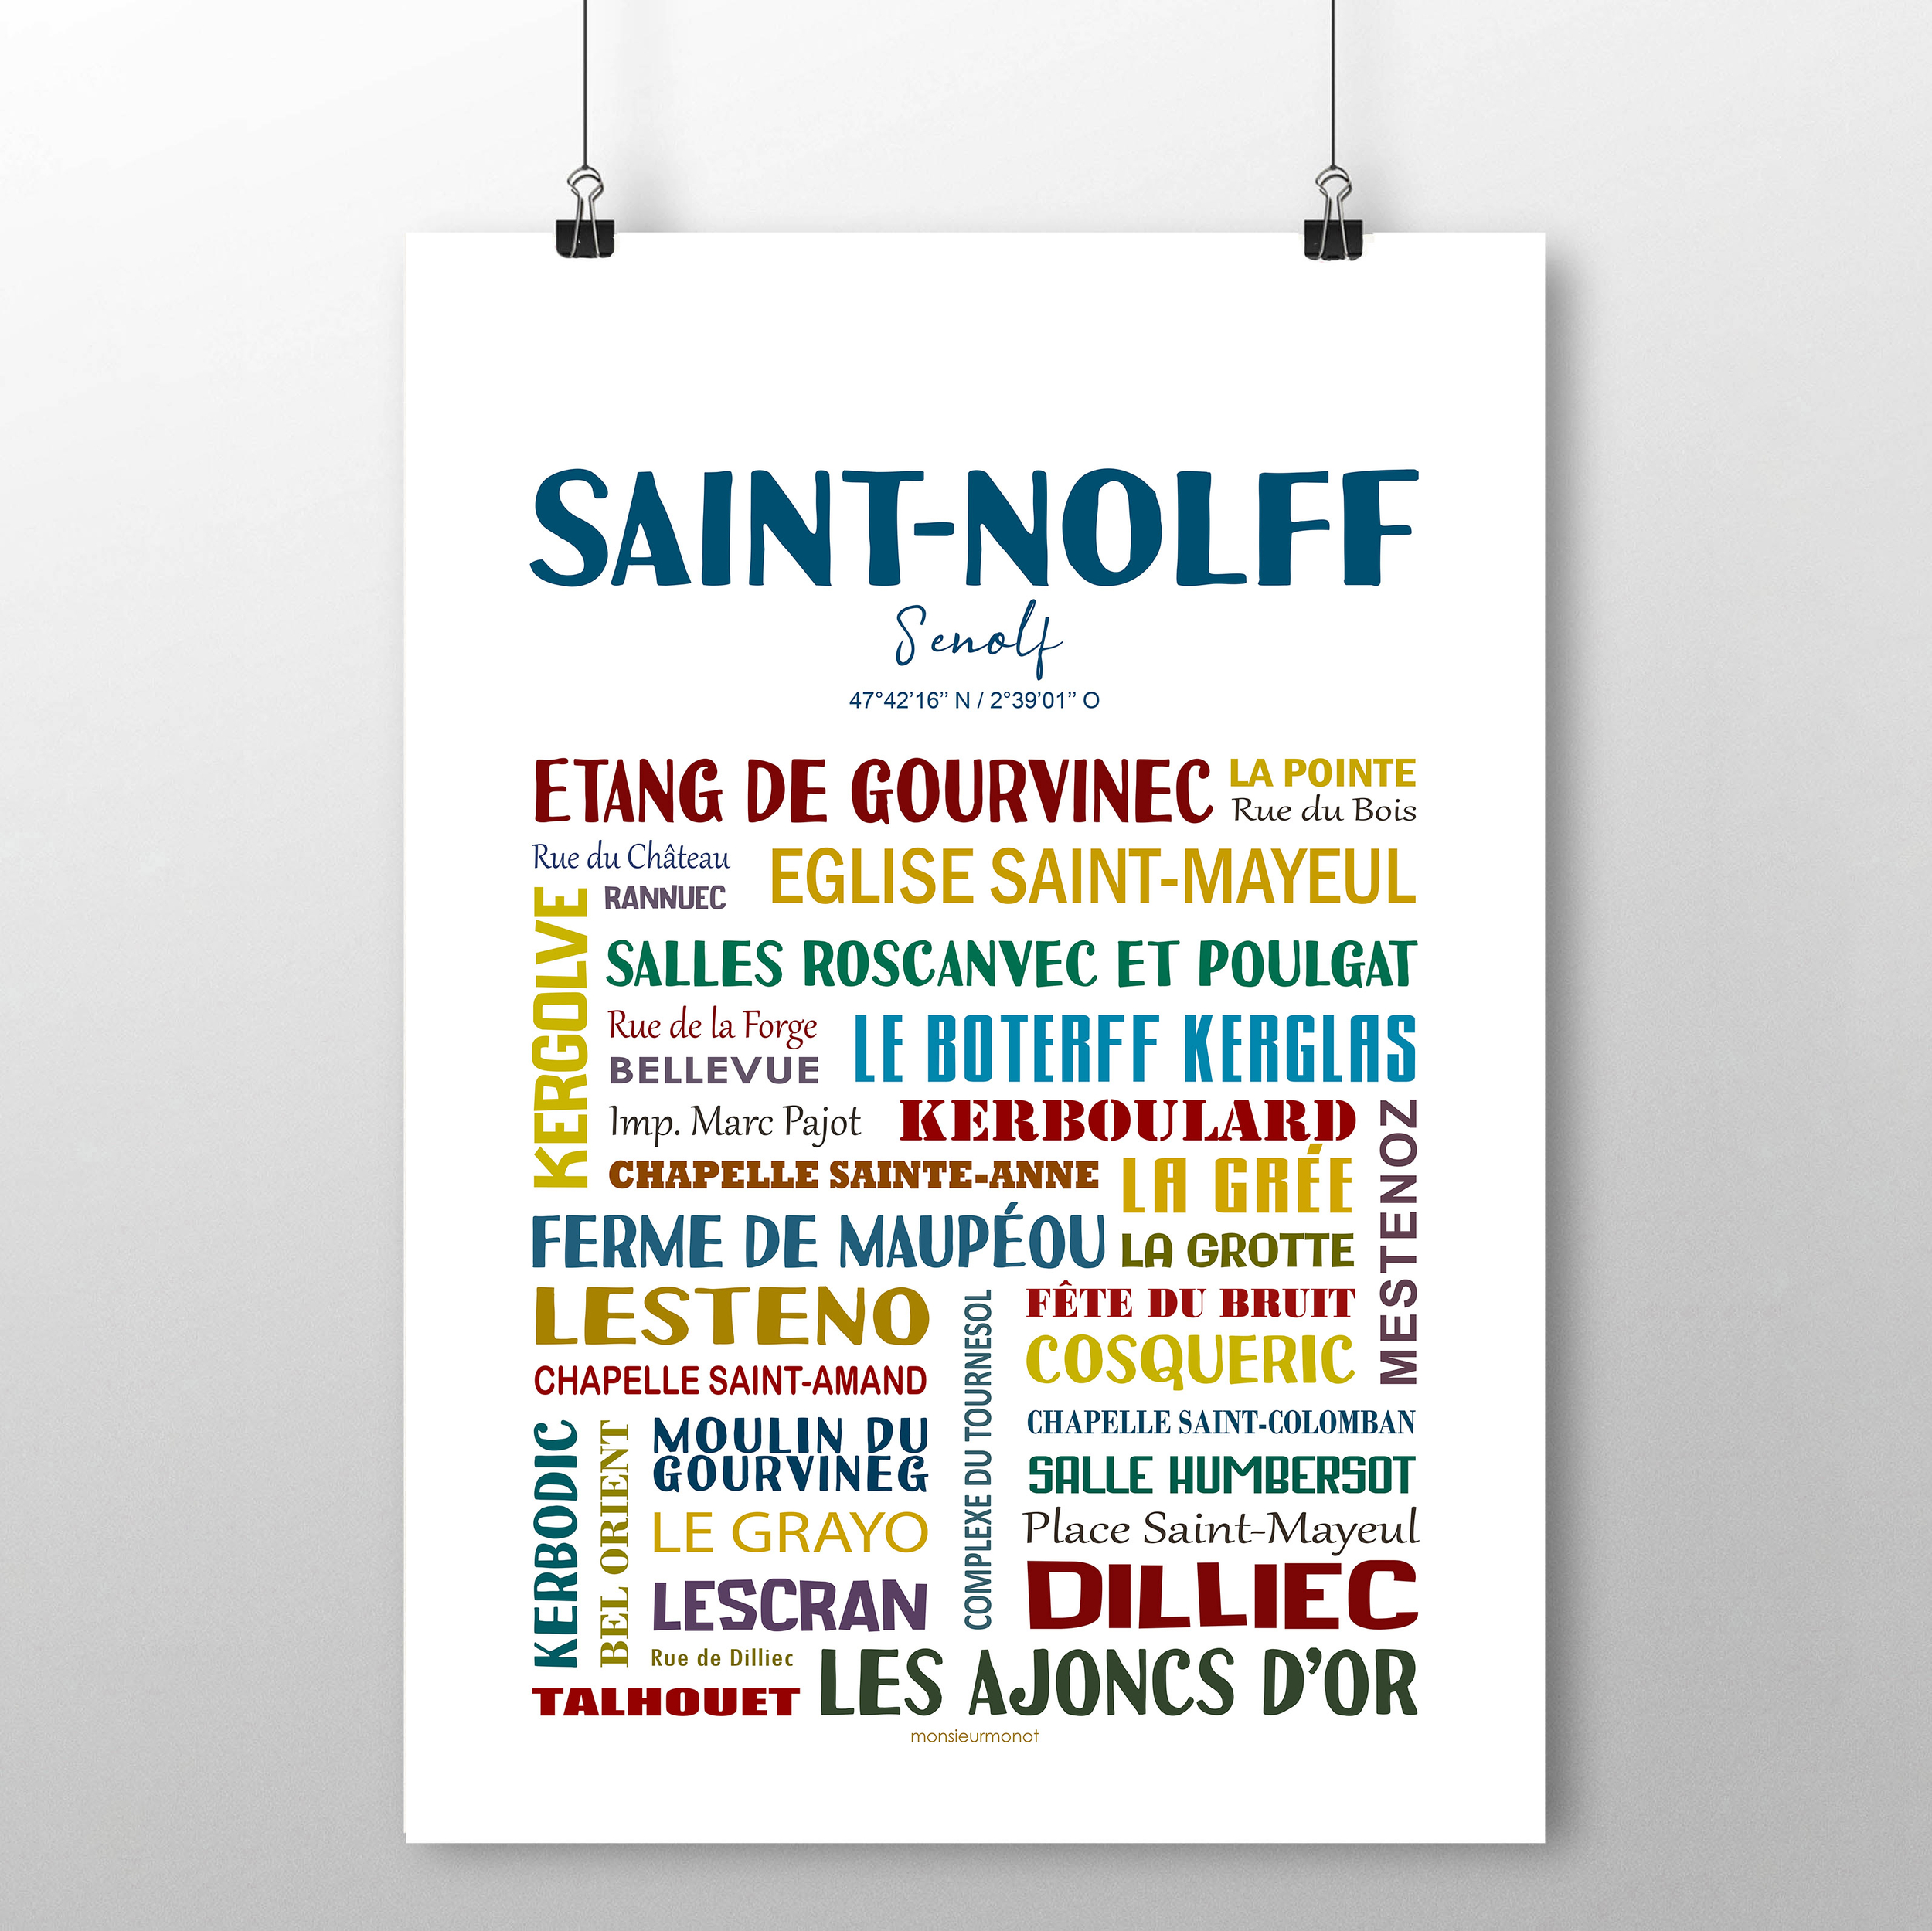 Saint Nolff 2